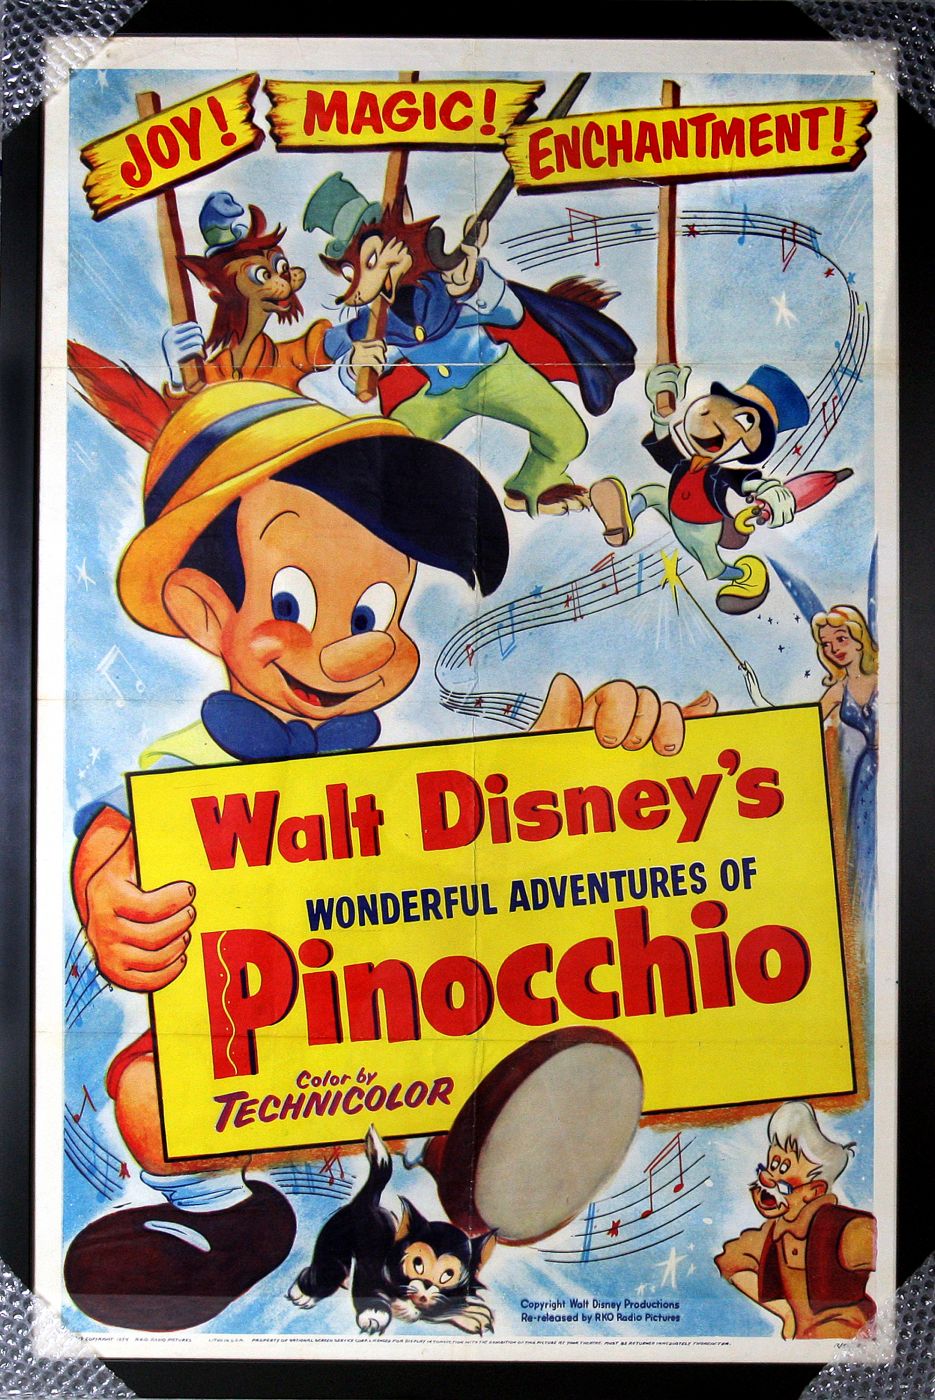 Pinocchio Movie Wallpapers